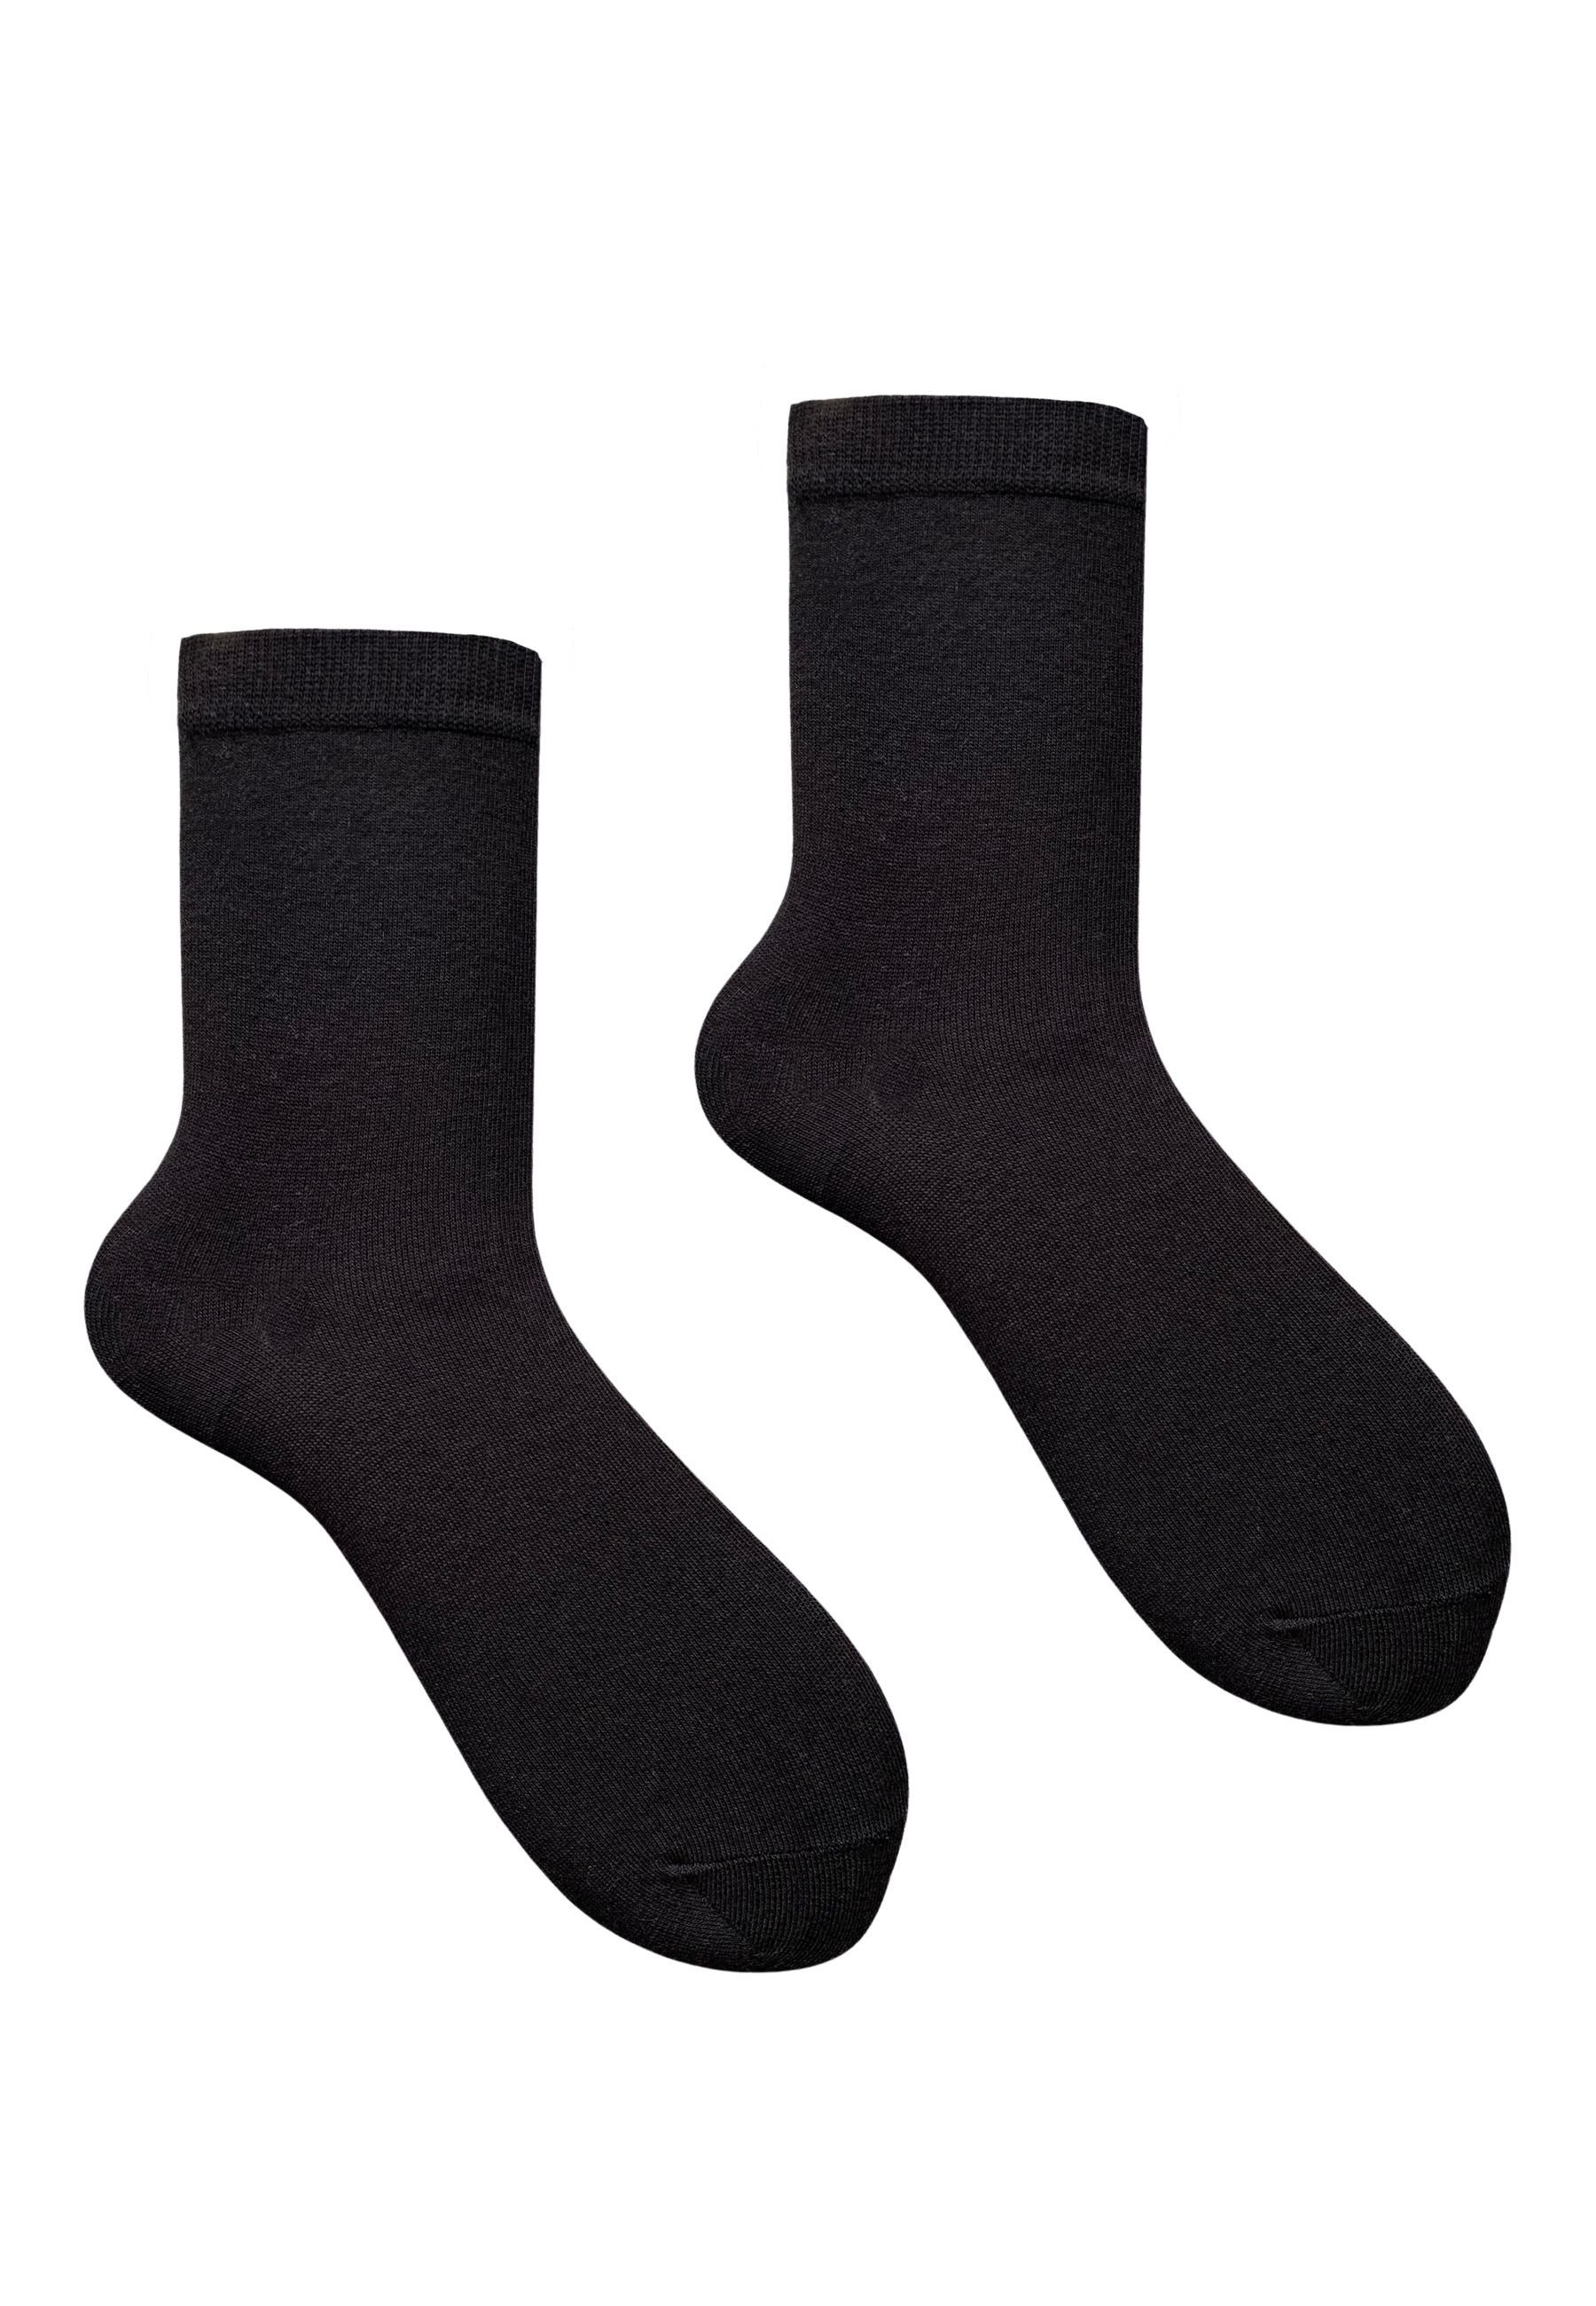 5 SOX NO.15 SOCKEN Bunt Basicsocken PAAR BAUMWOLLE HESE Socken